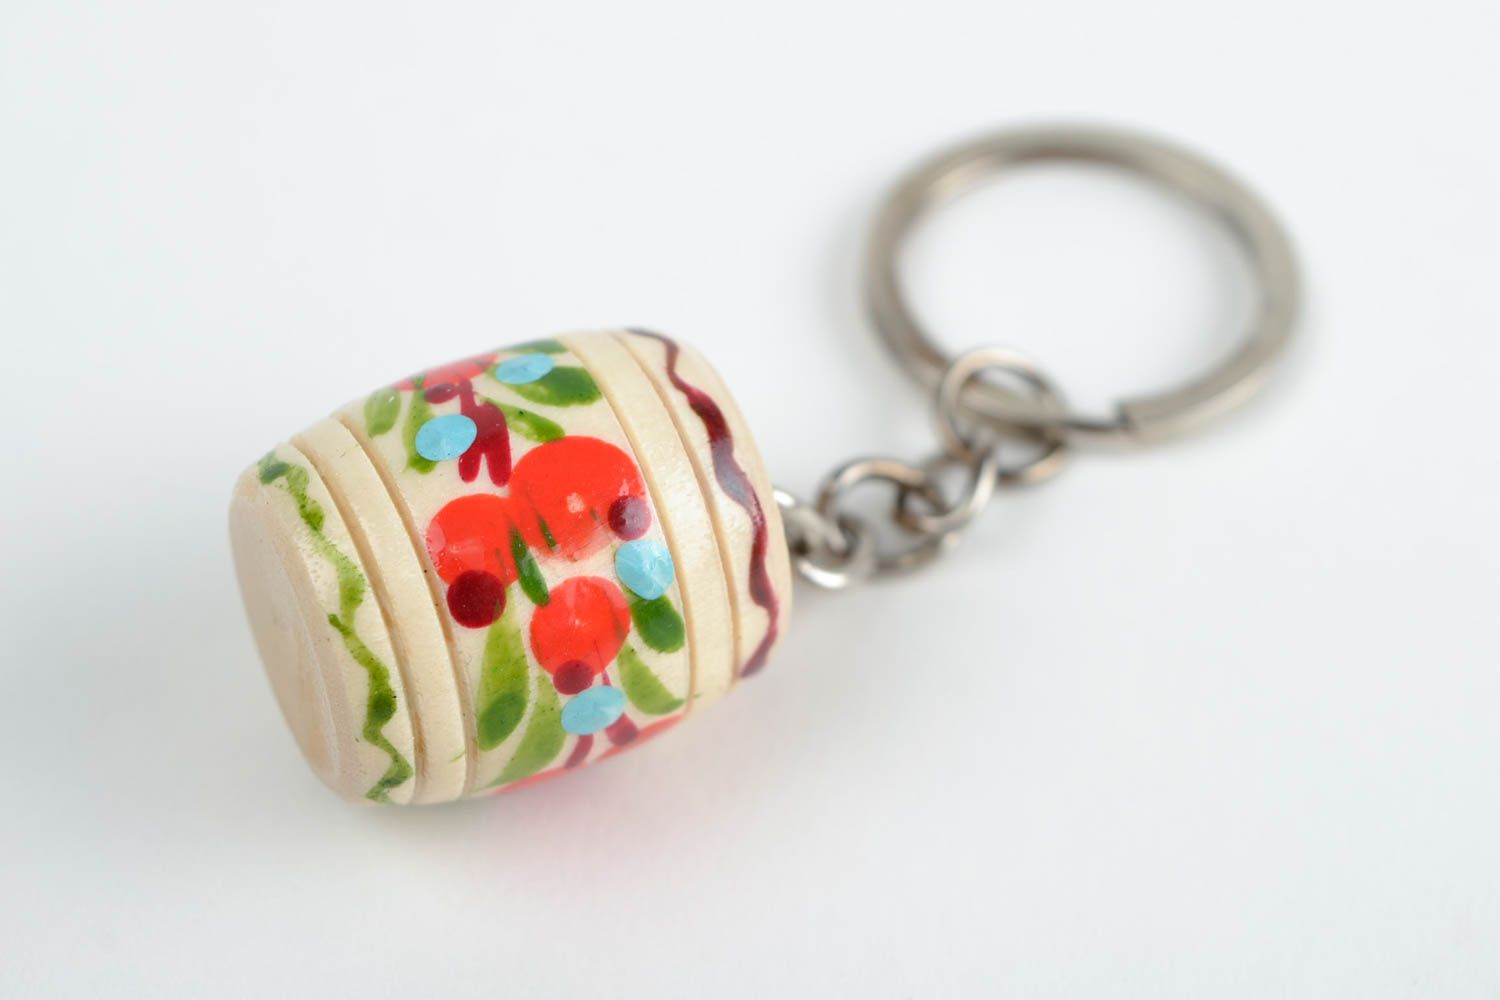 Unusual handmade wooden keychain popular keychain fashion accessories gift ideas photo 5